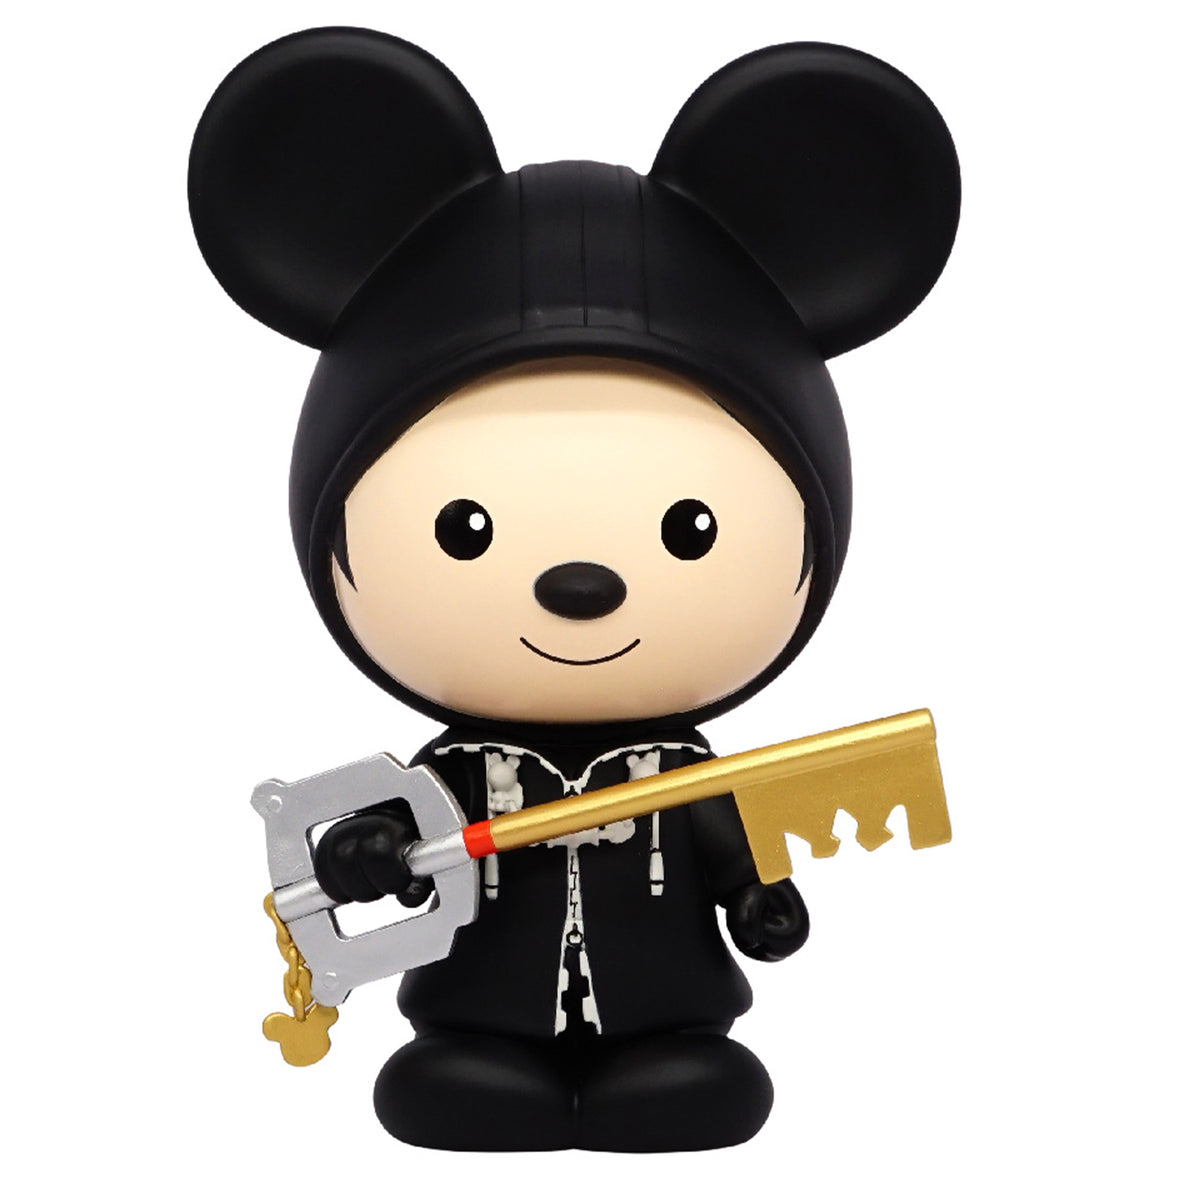 Disney Kingdom Hearts Mickey Mouse Figural Display Bank